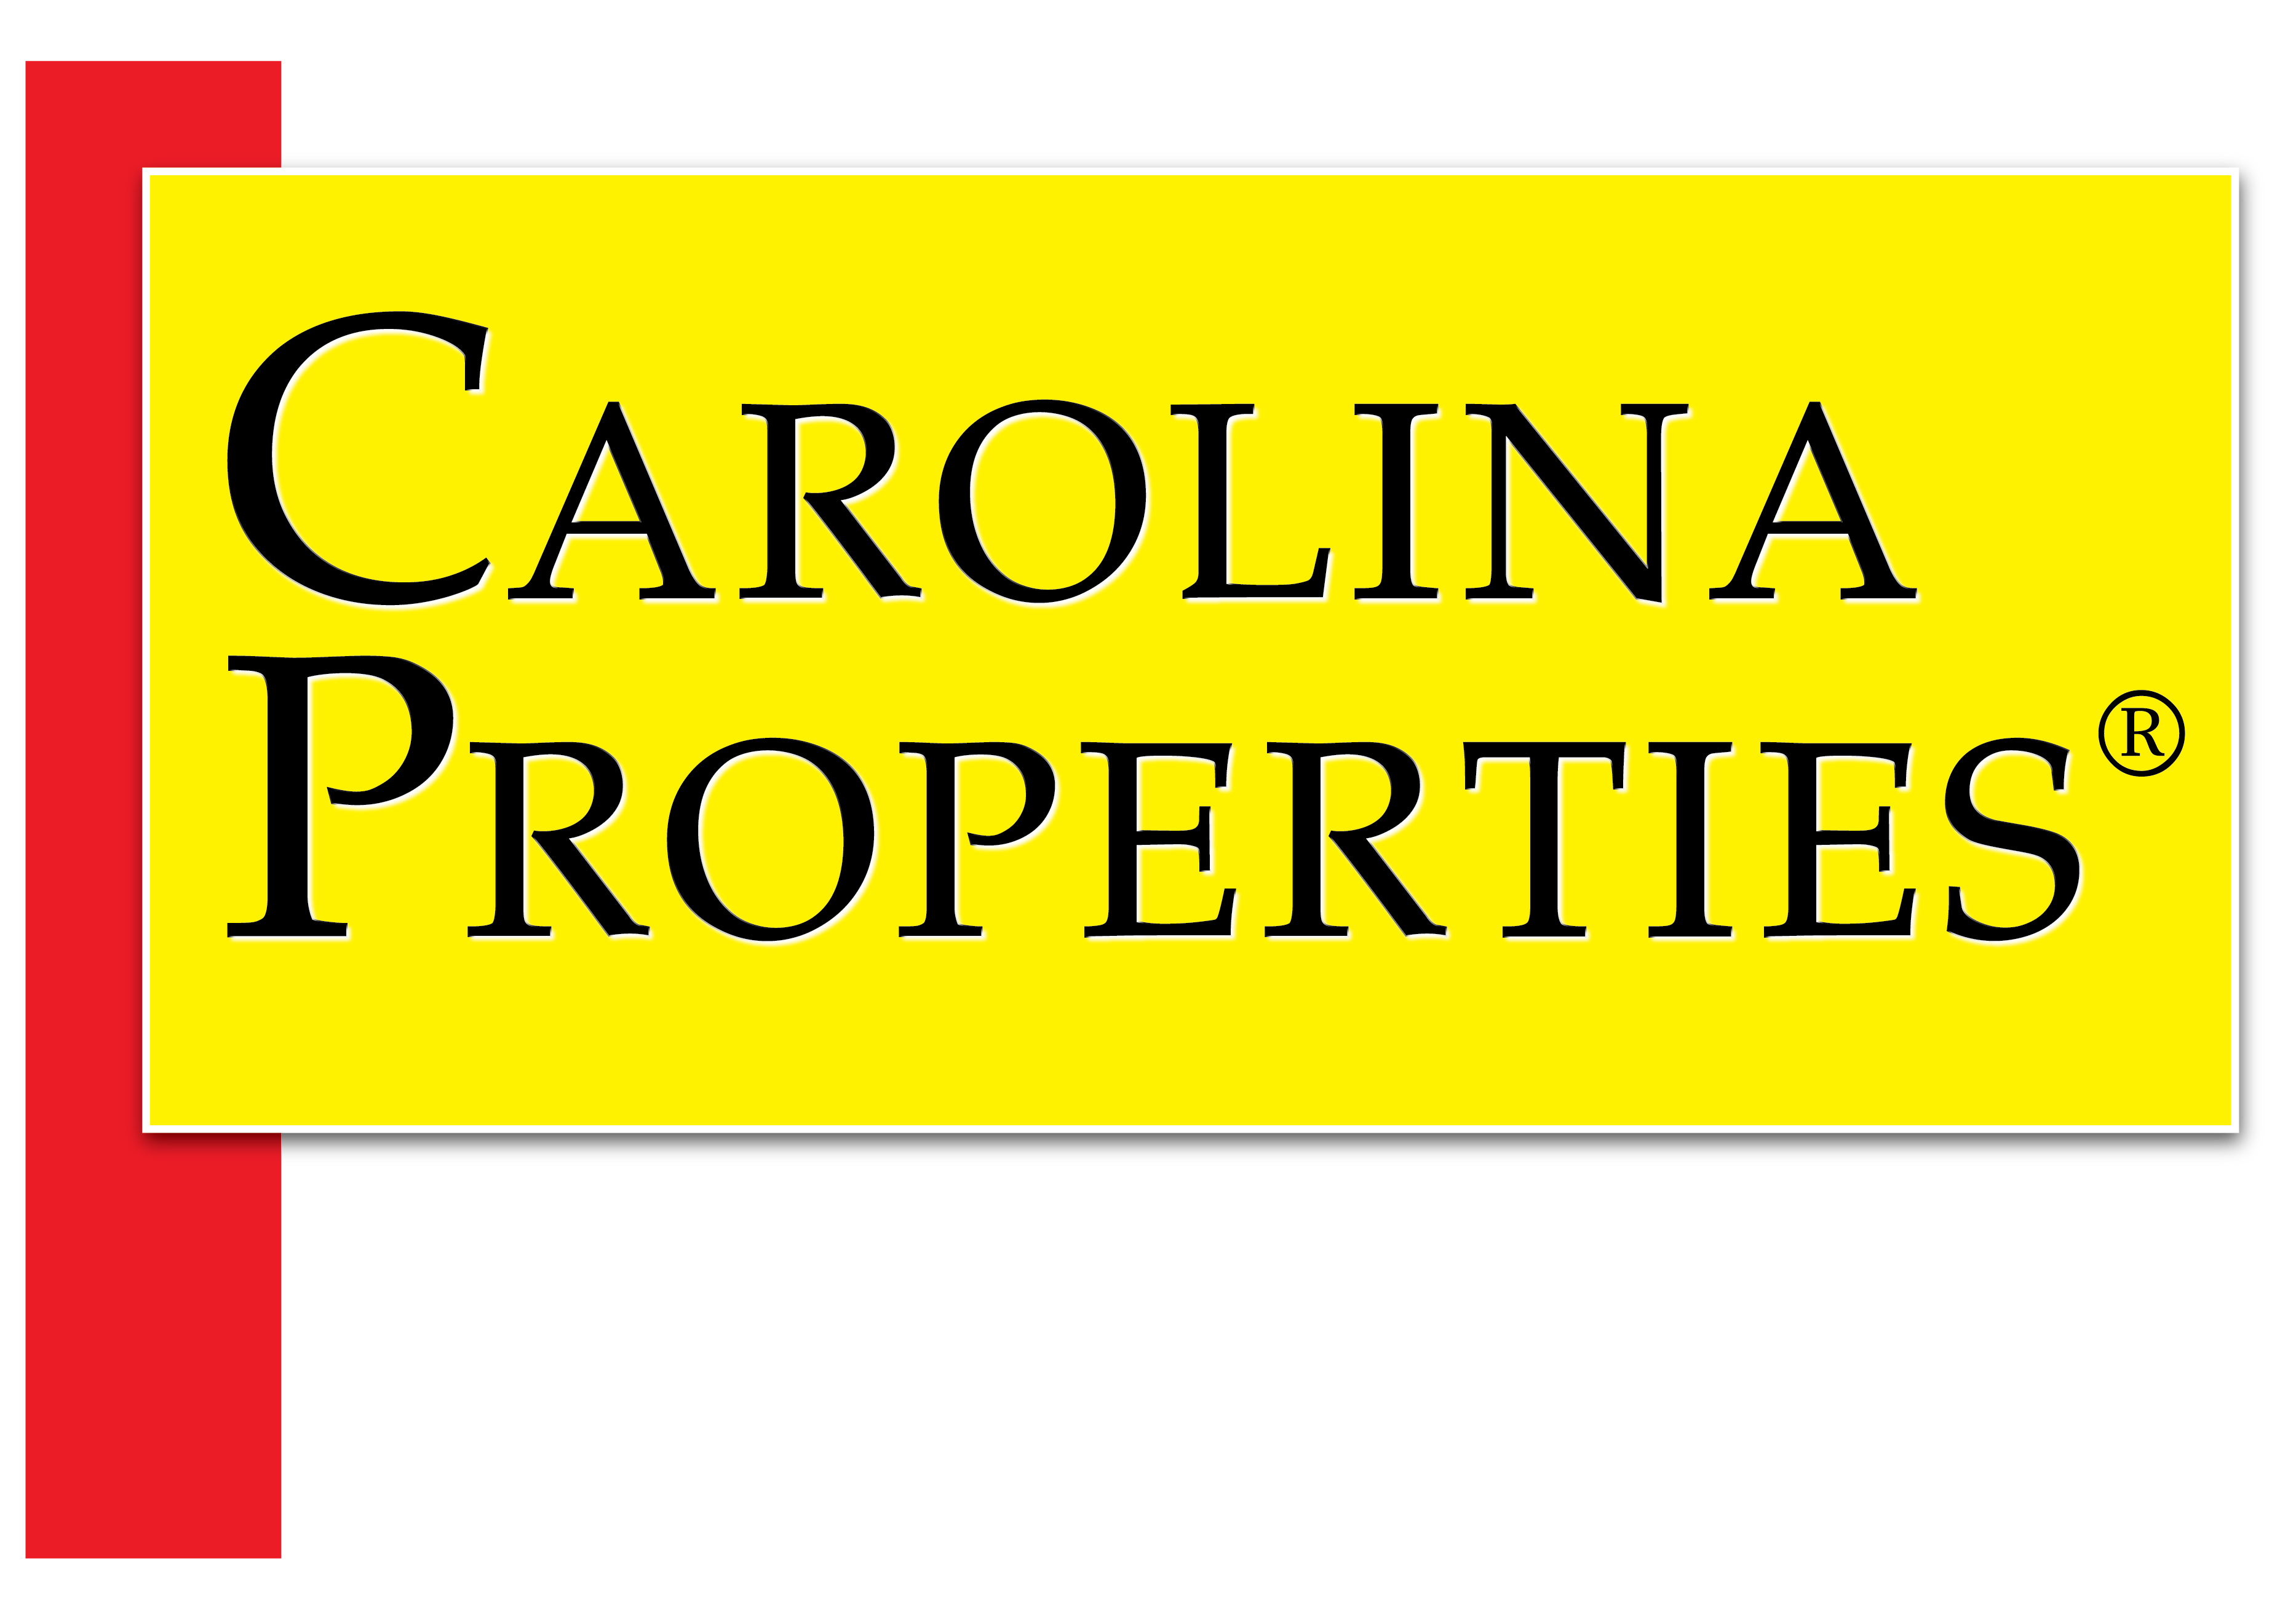 Carolina Properties - Real Estate, Property Management, and Vacation Rentals serving Lake Lure, Lake Adger, Lake Lanier, Chimney Rock - and more!